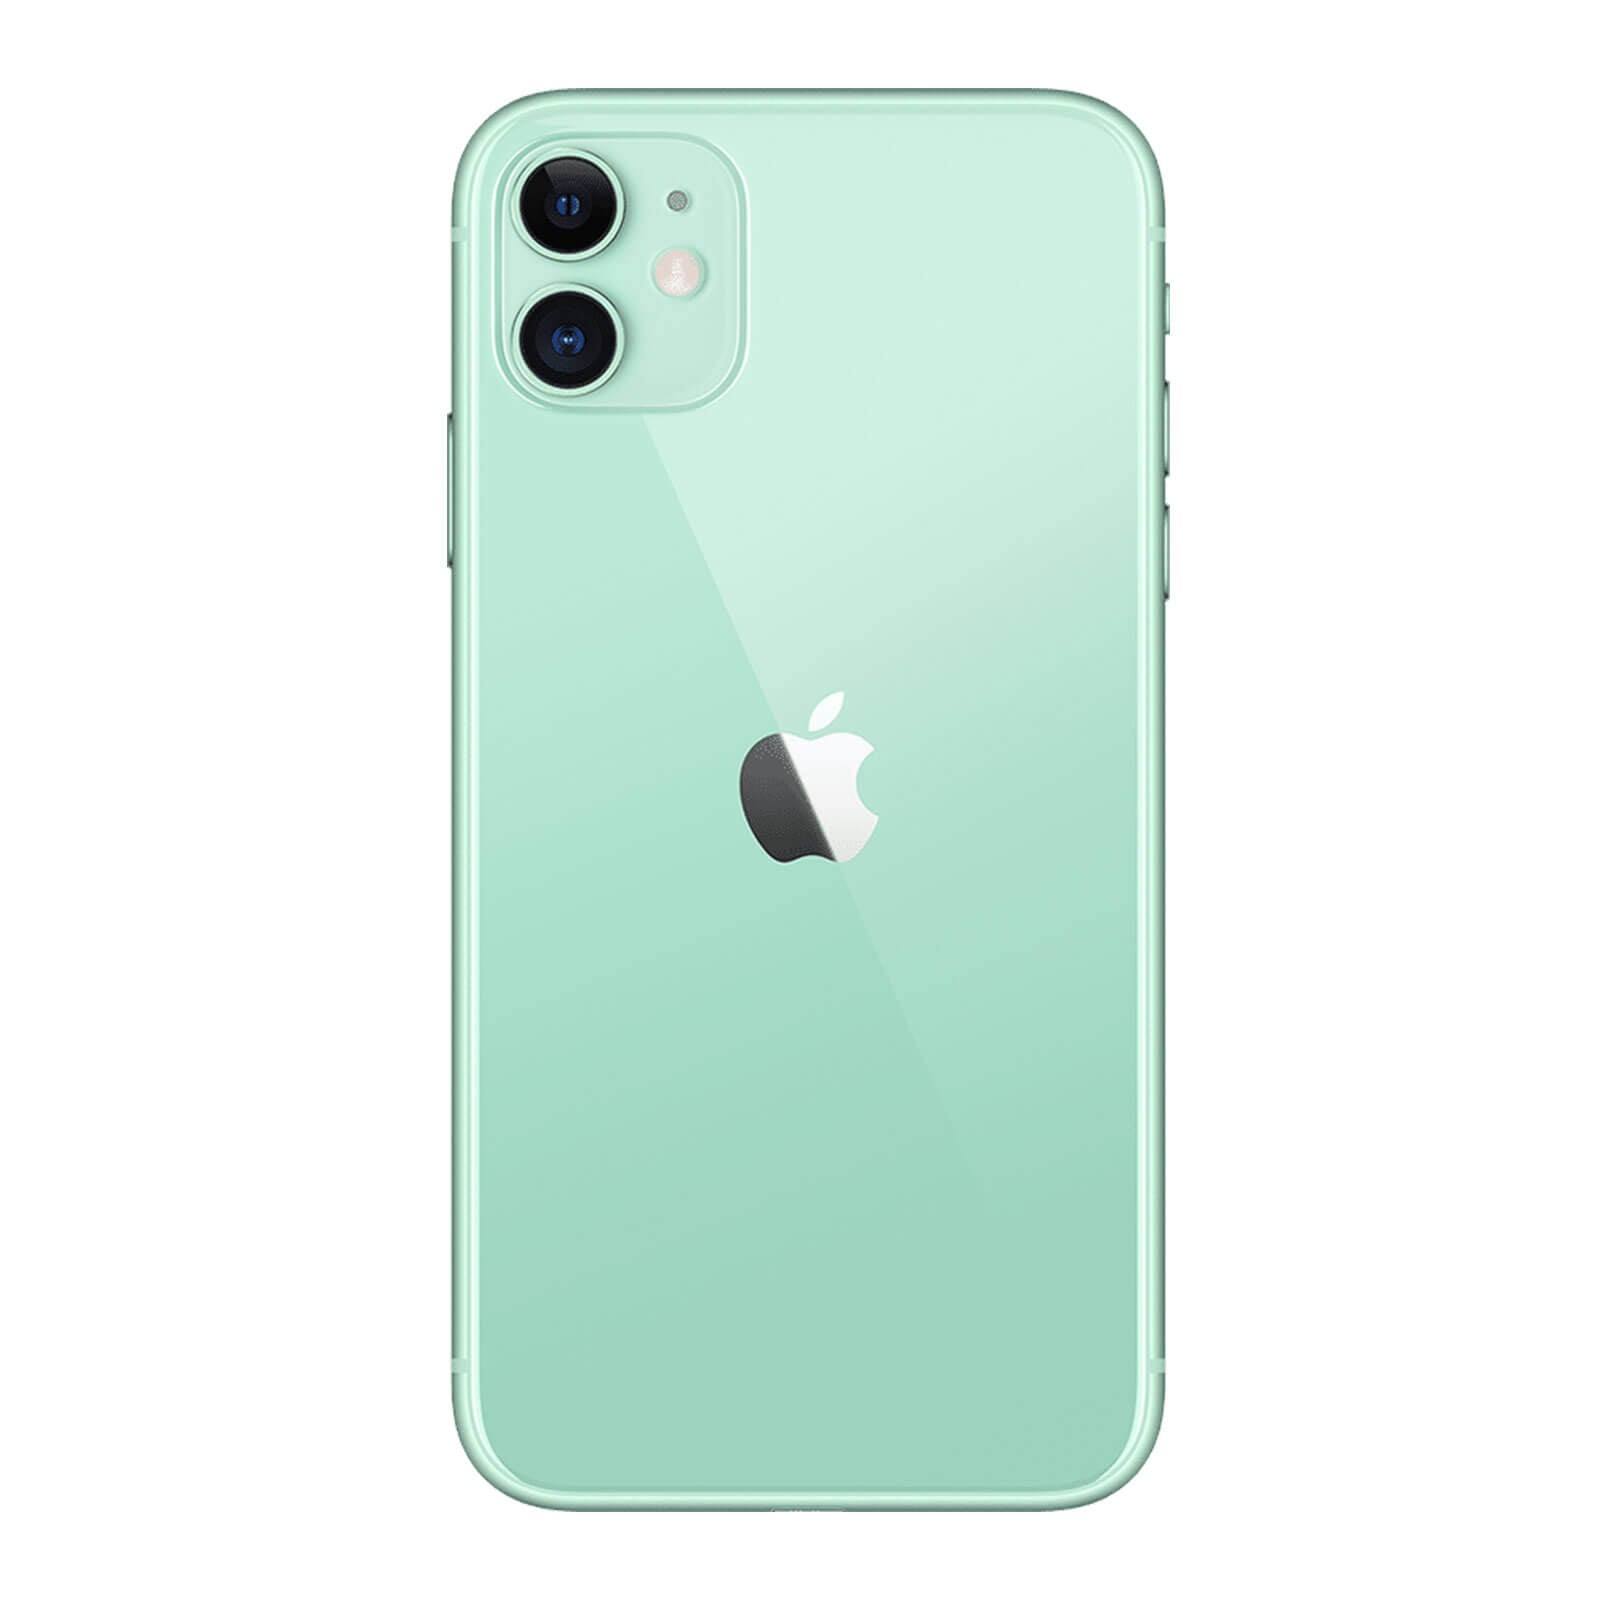 Apple iPhone 11 128GB Green Fair - Unlocked